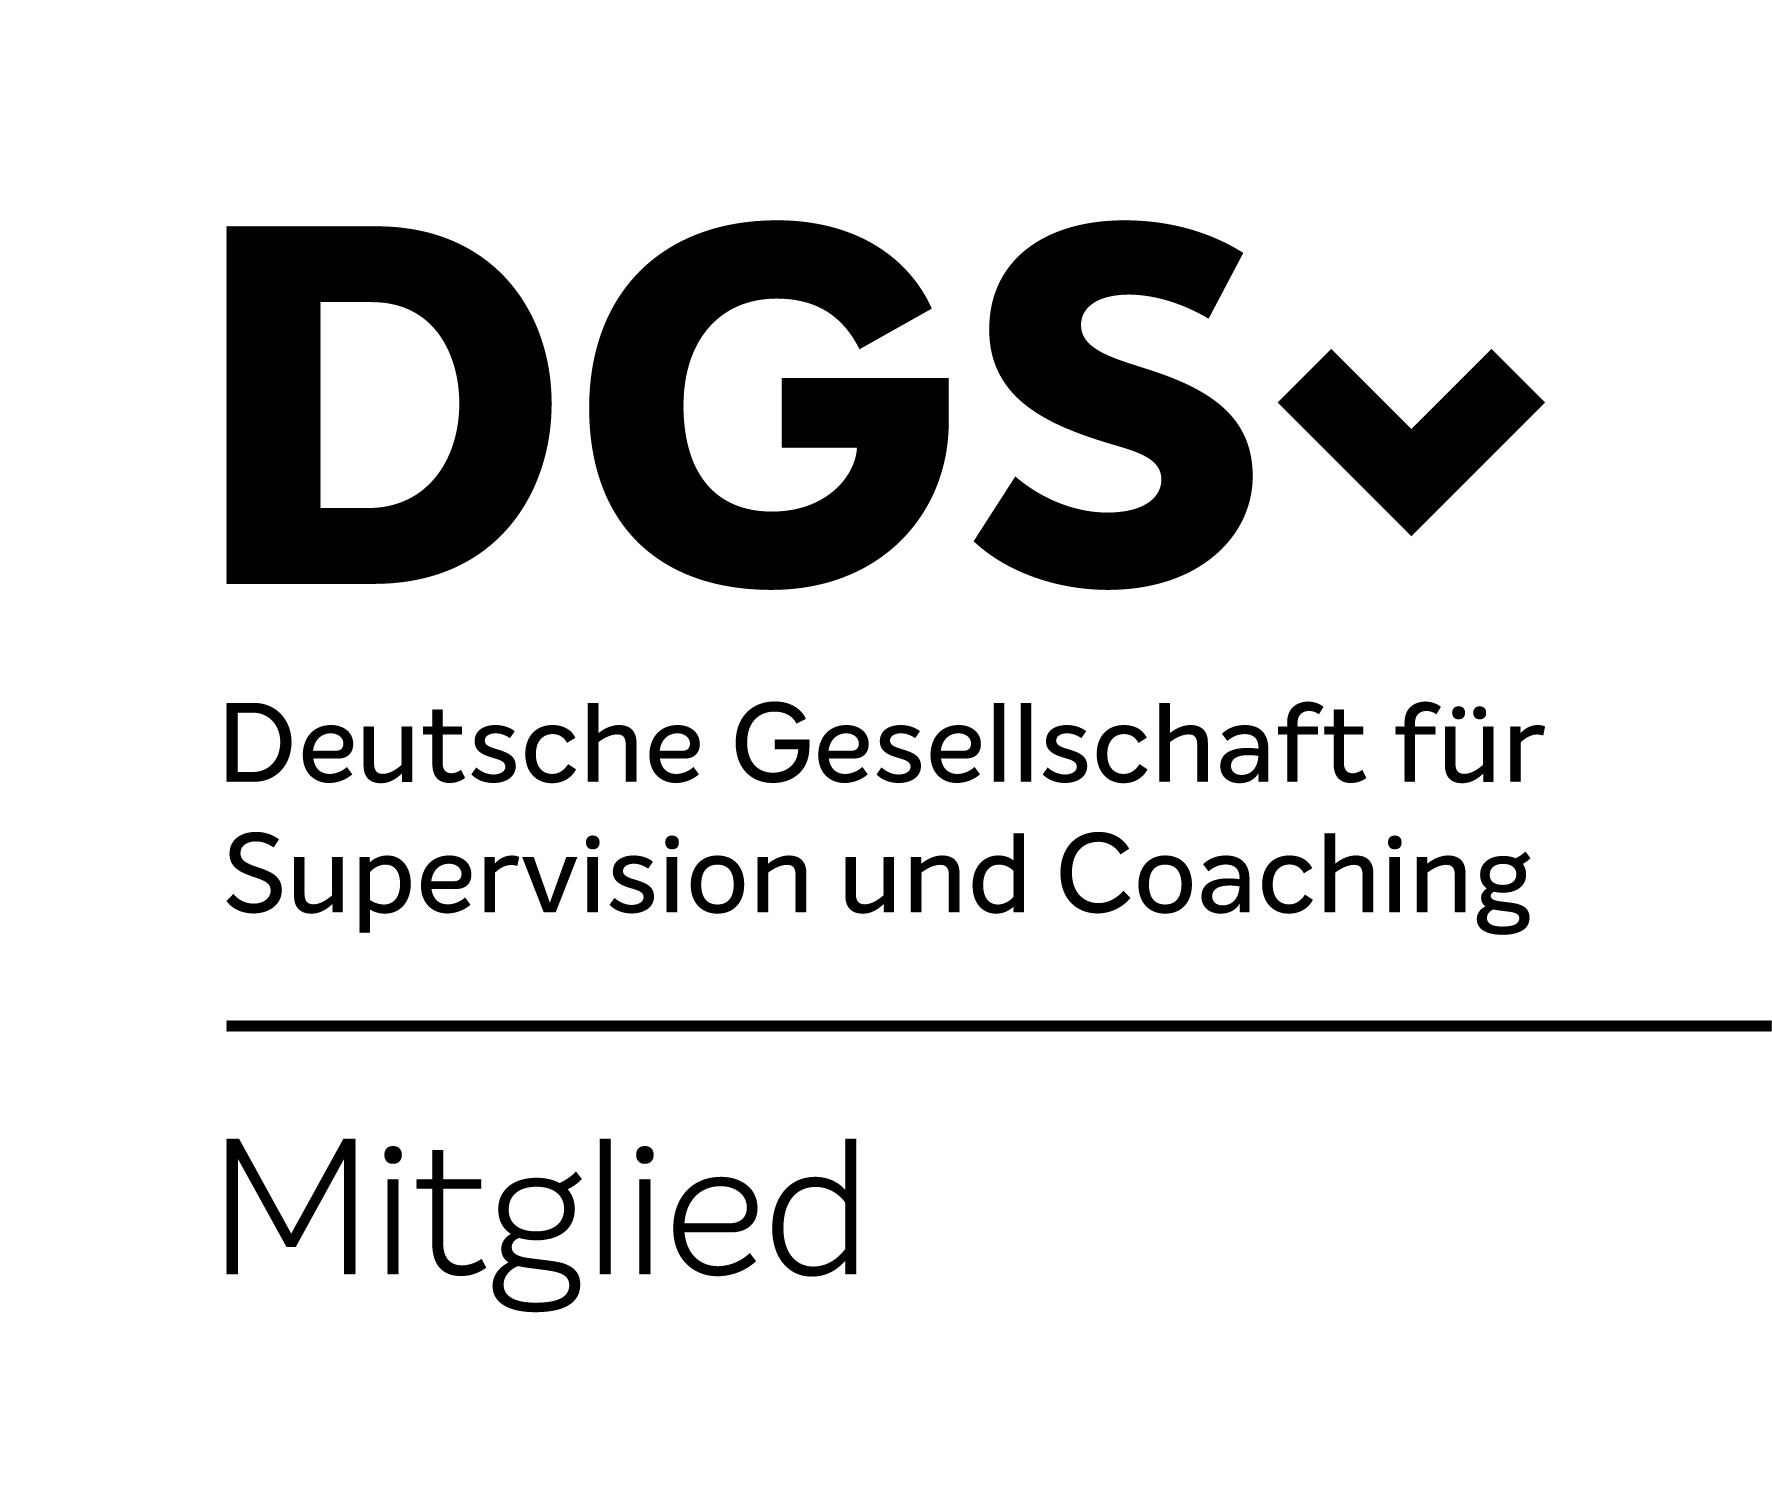 DGSv_Logo_Mitglieder_CMYK_white-black